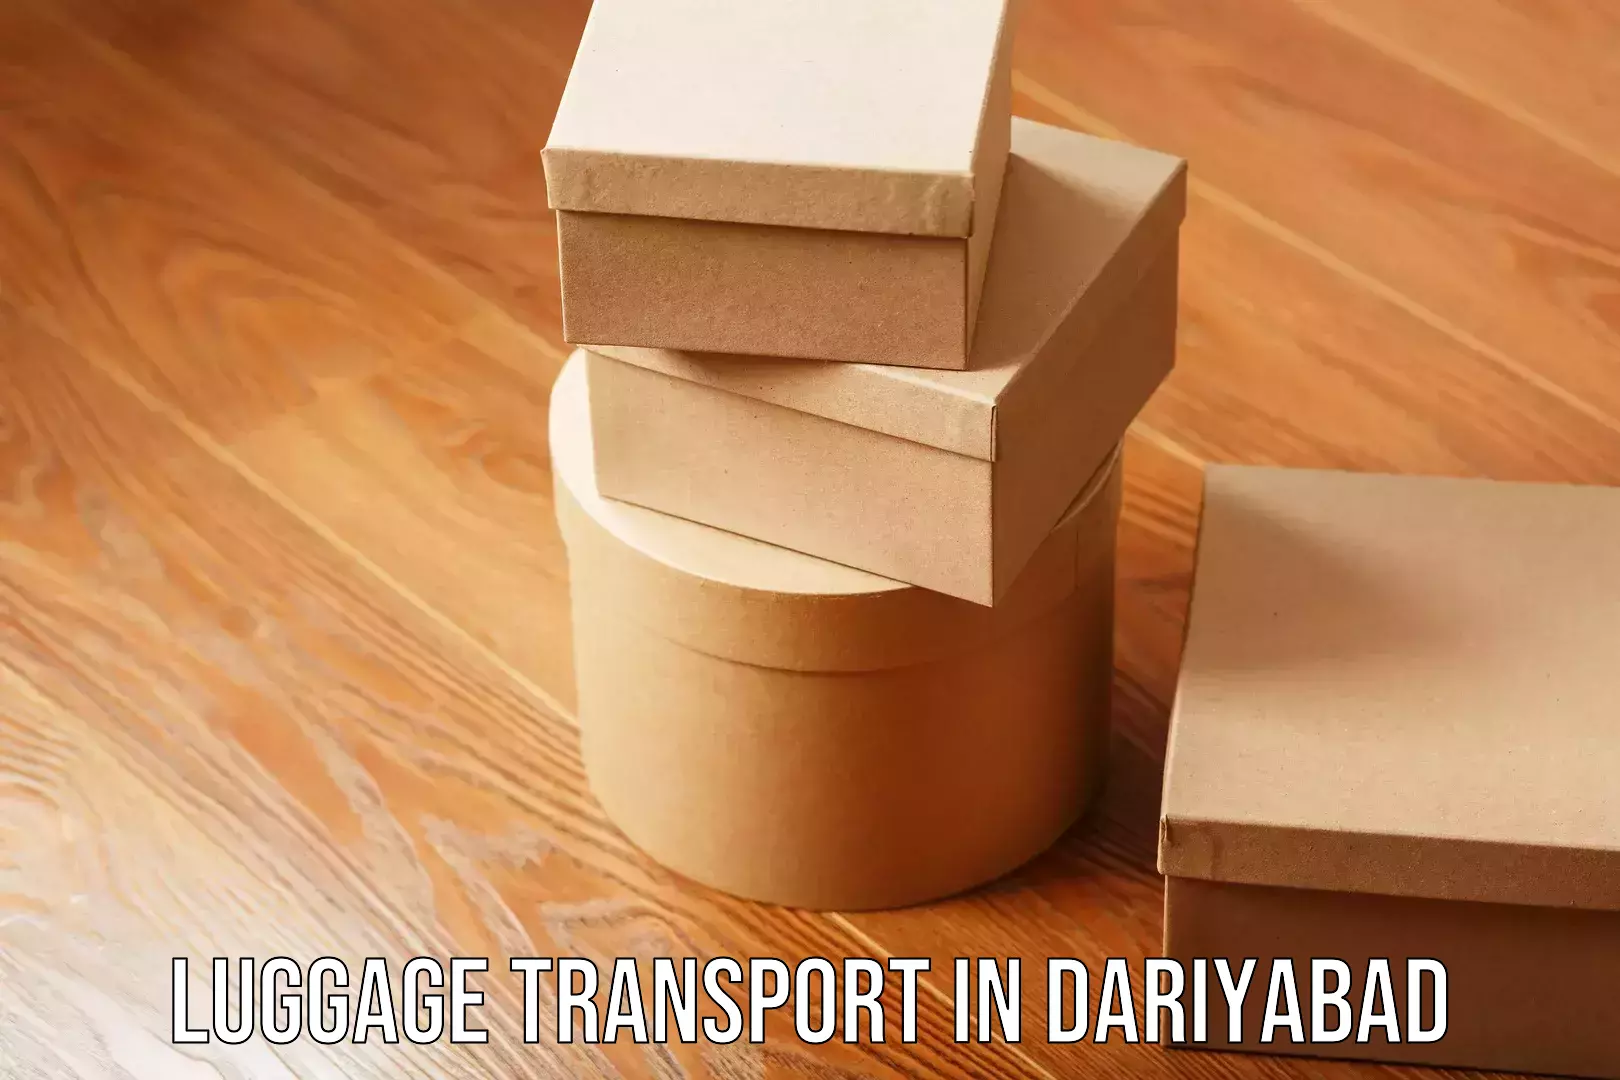 Luggage delivery estimate in Dariyabad